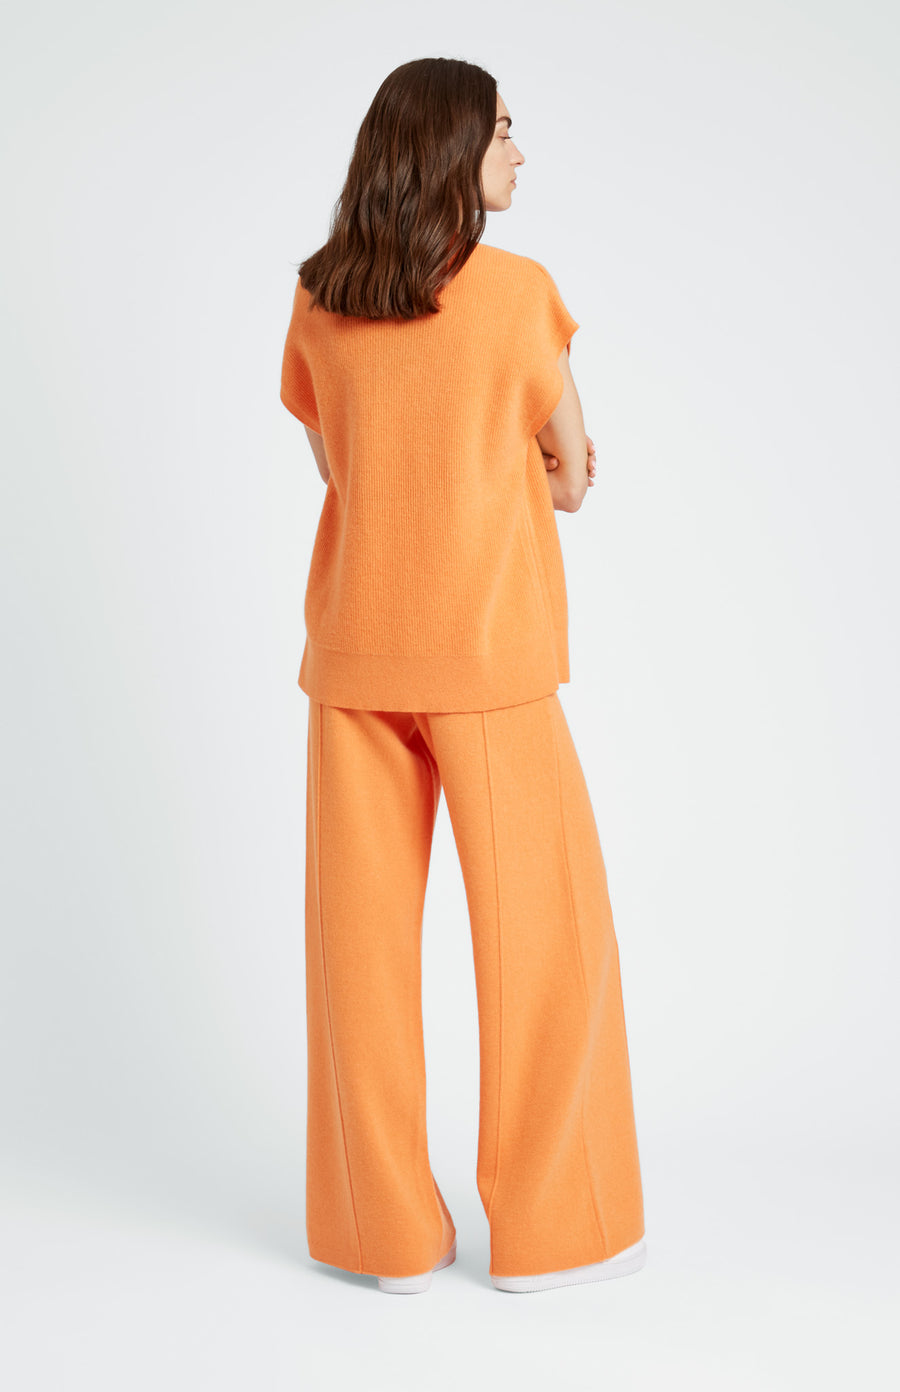 V Neck Sleeveless cashmere blend jumper in Orange rear view - Pringle of Scotland